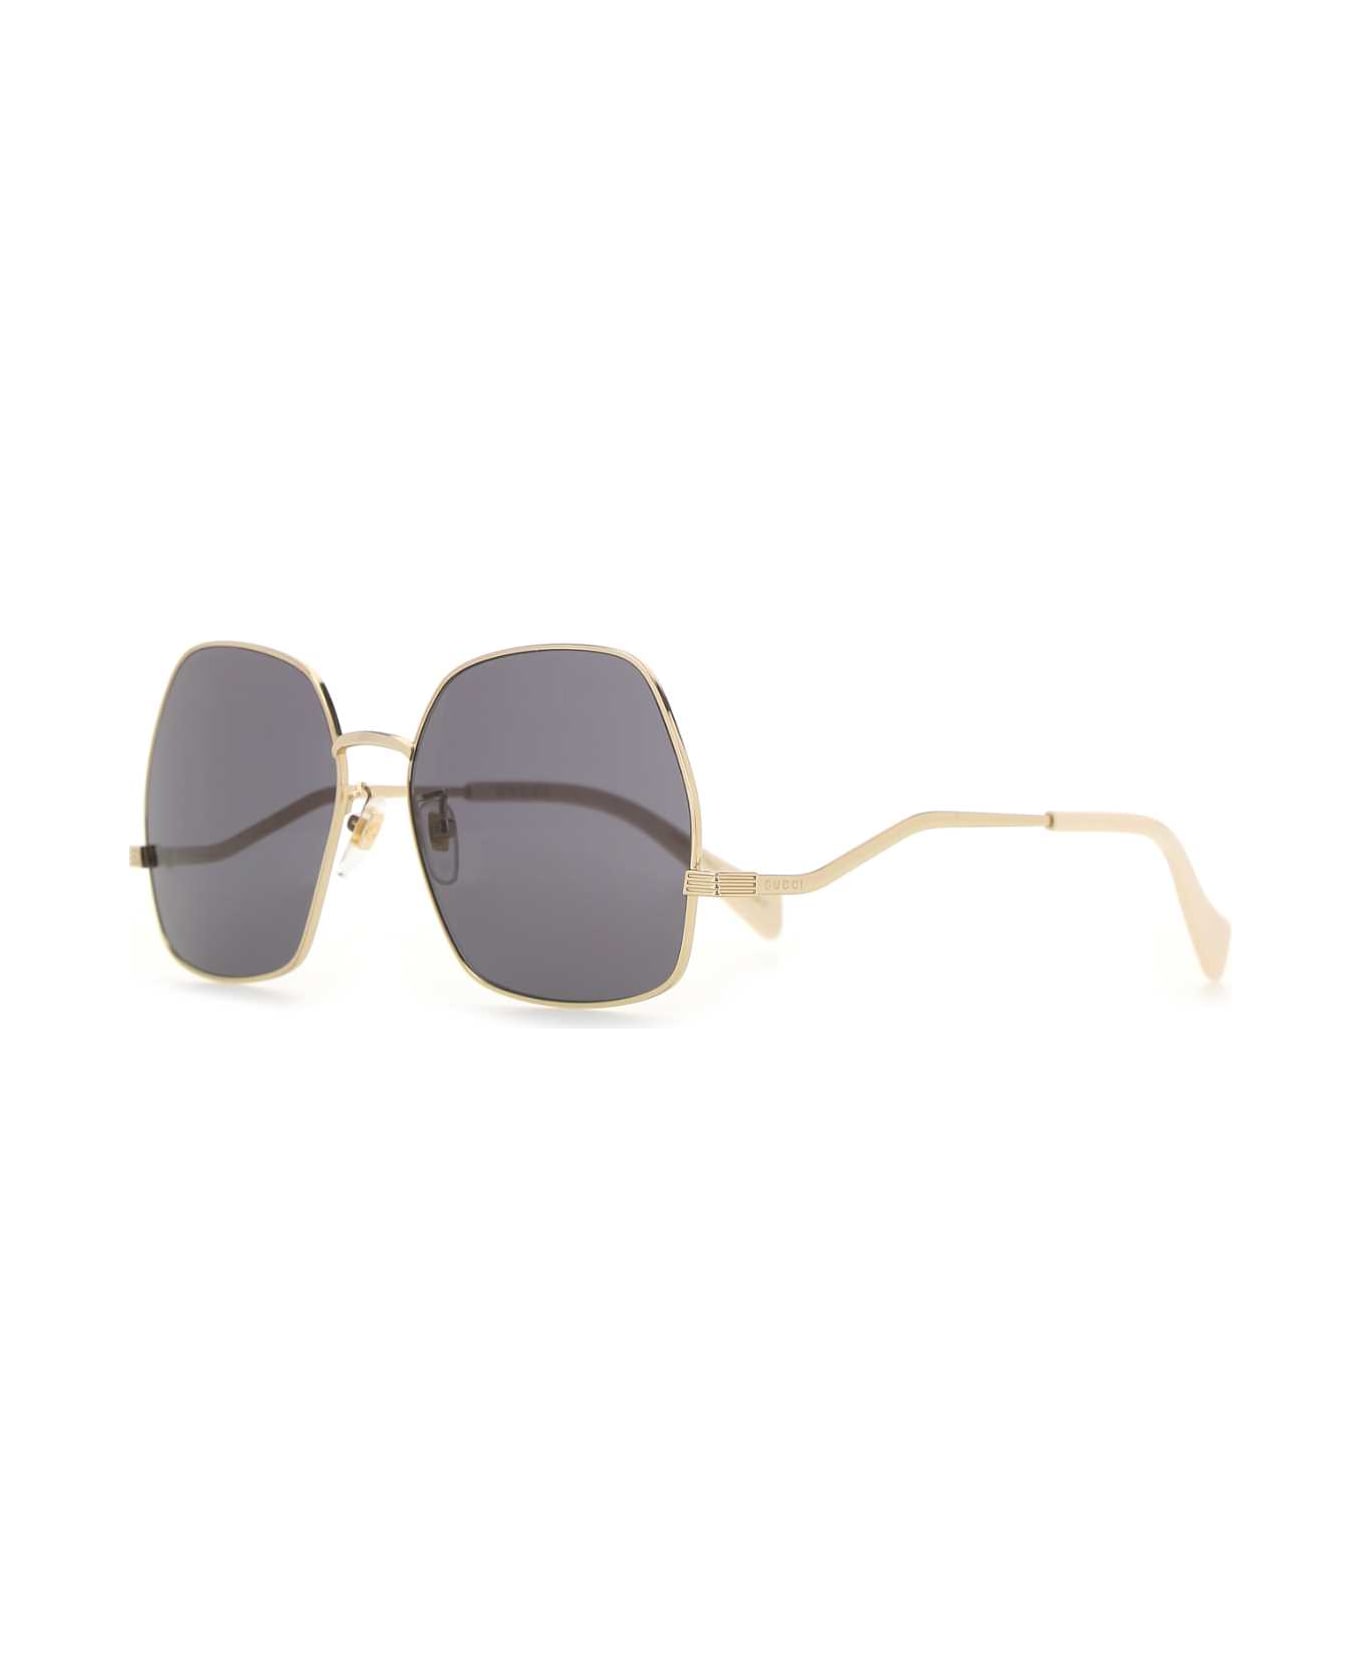 Gucci Gold Metal Sunglasses - 8012 サングラス